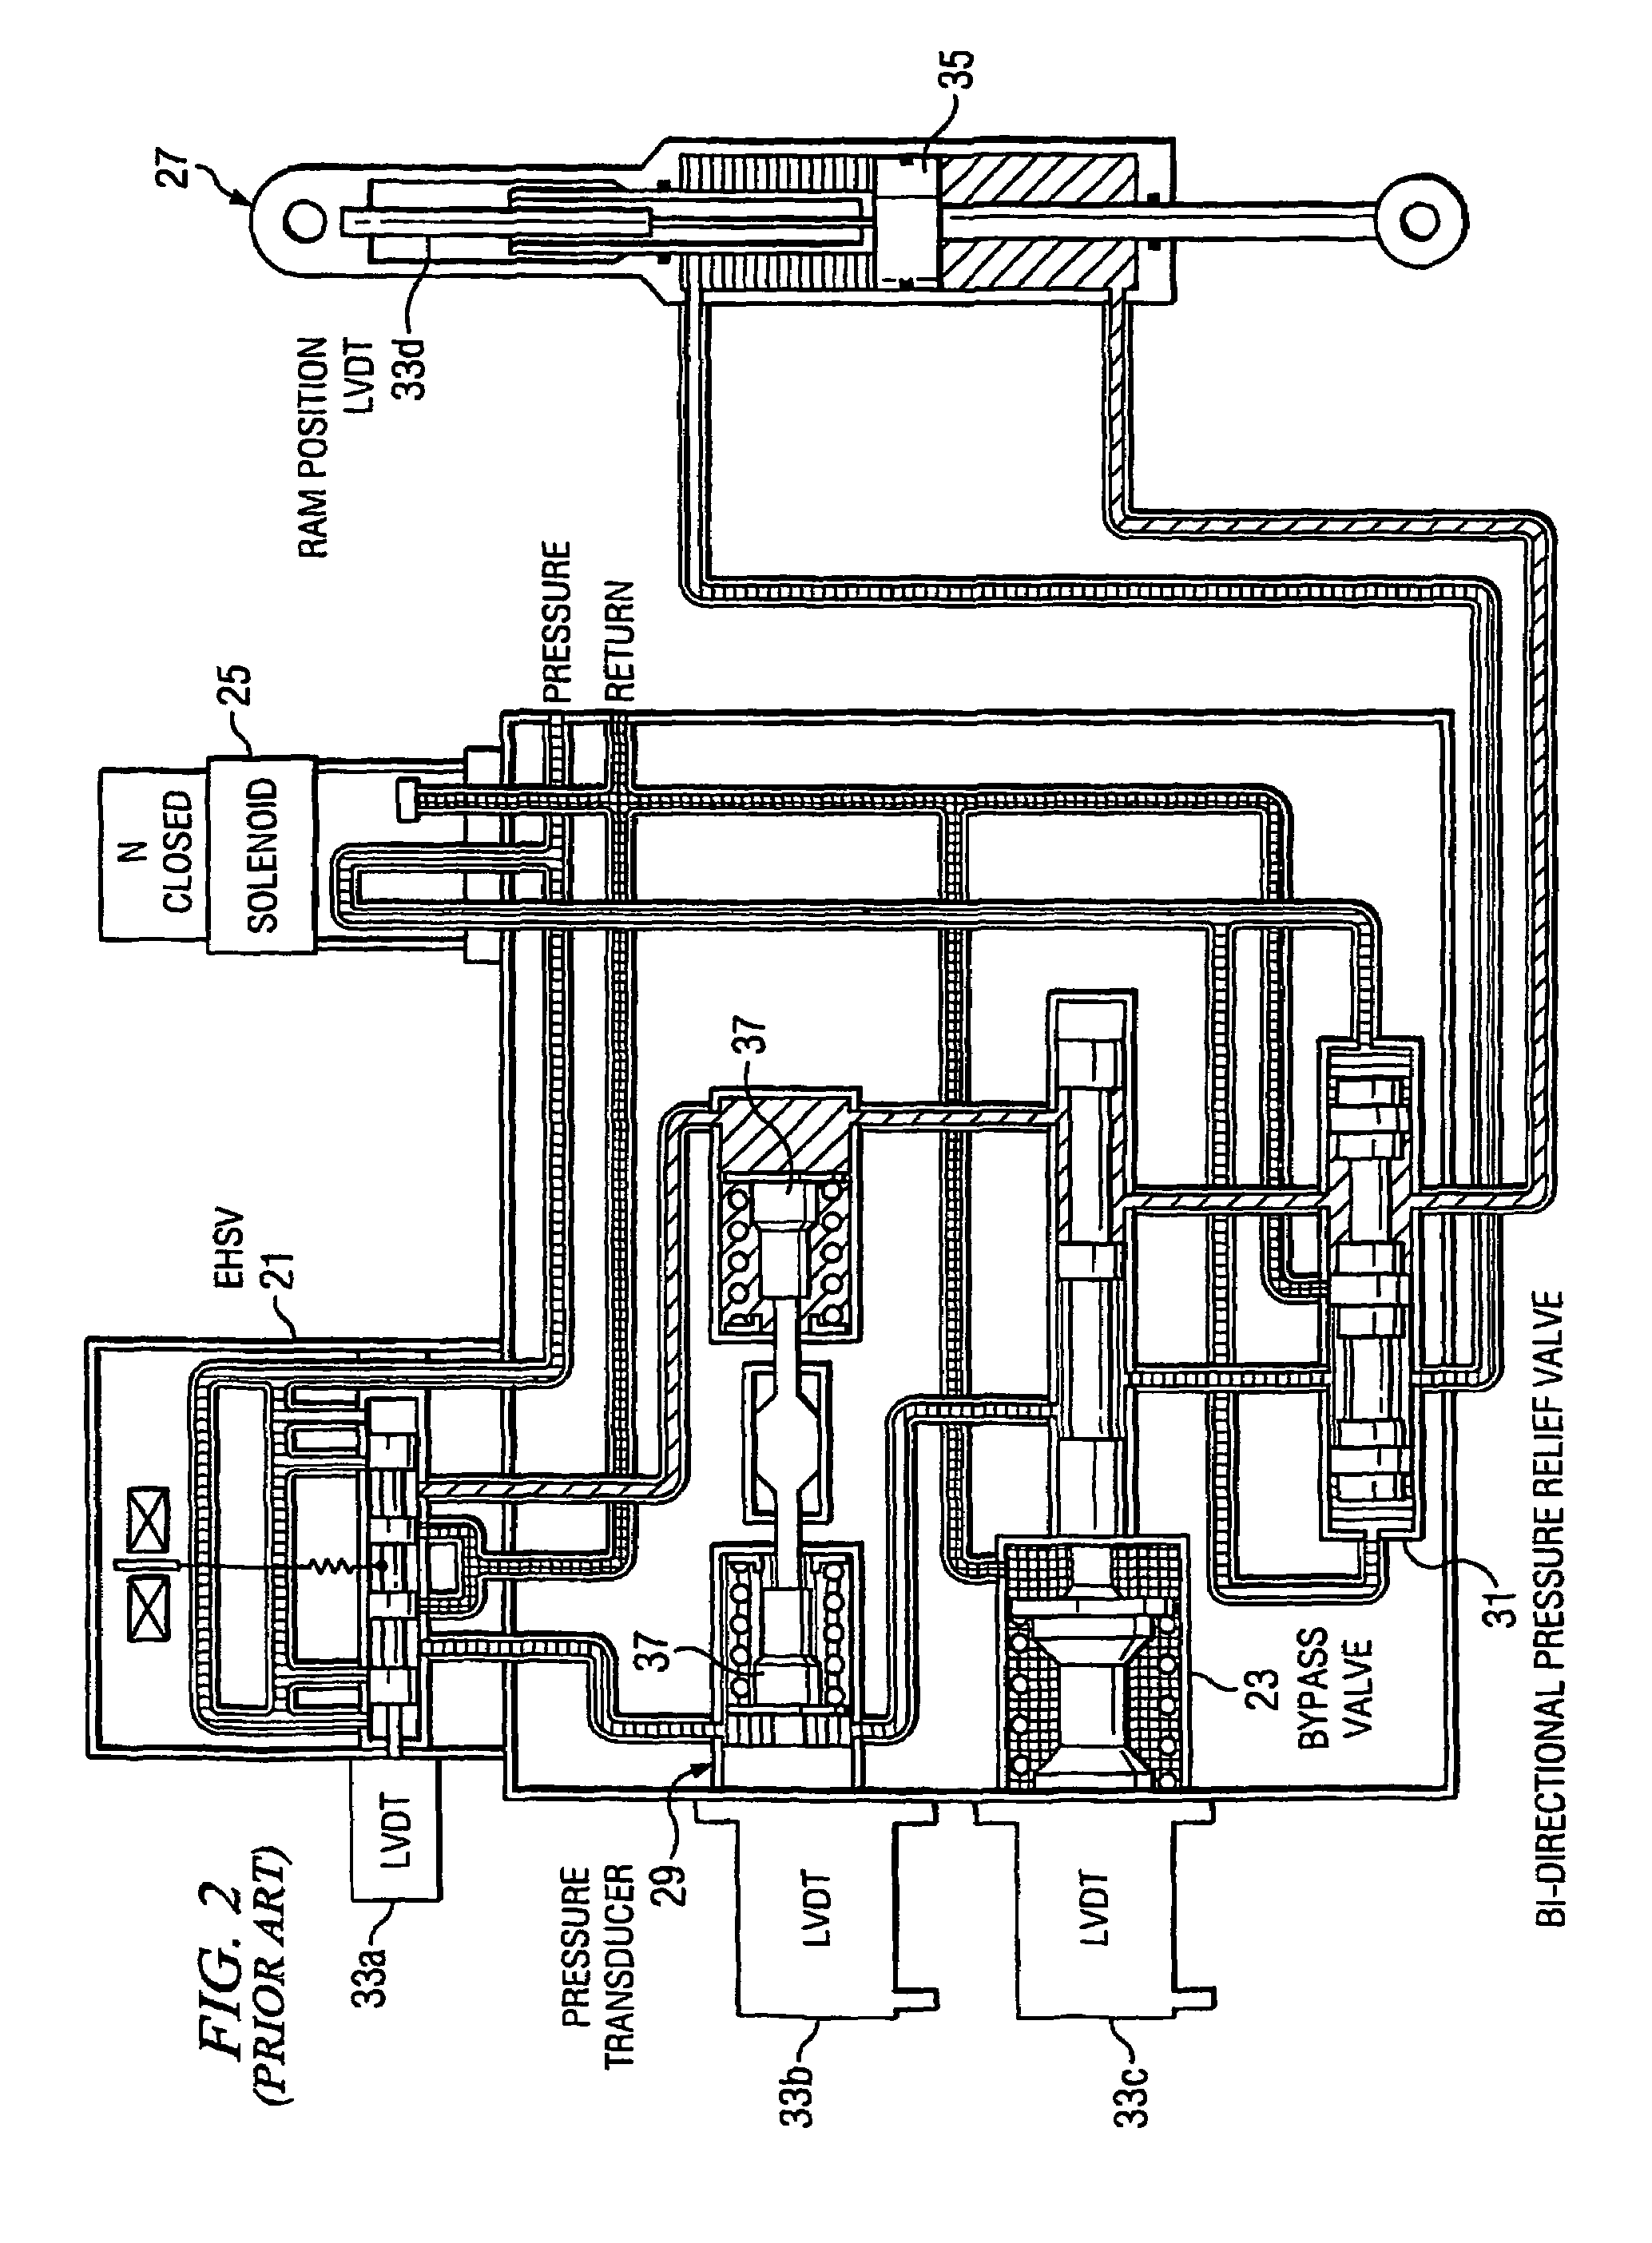 Integrated three function valve